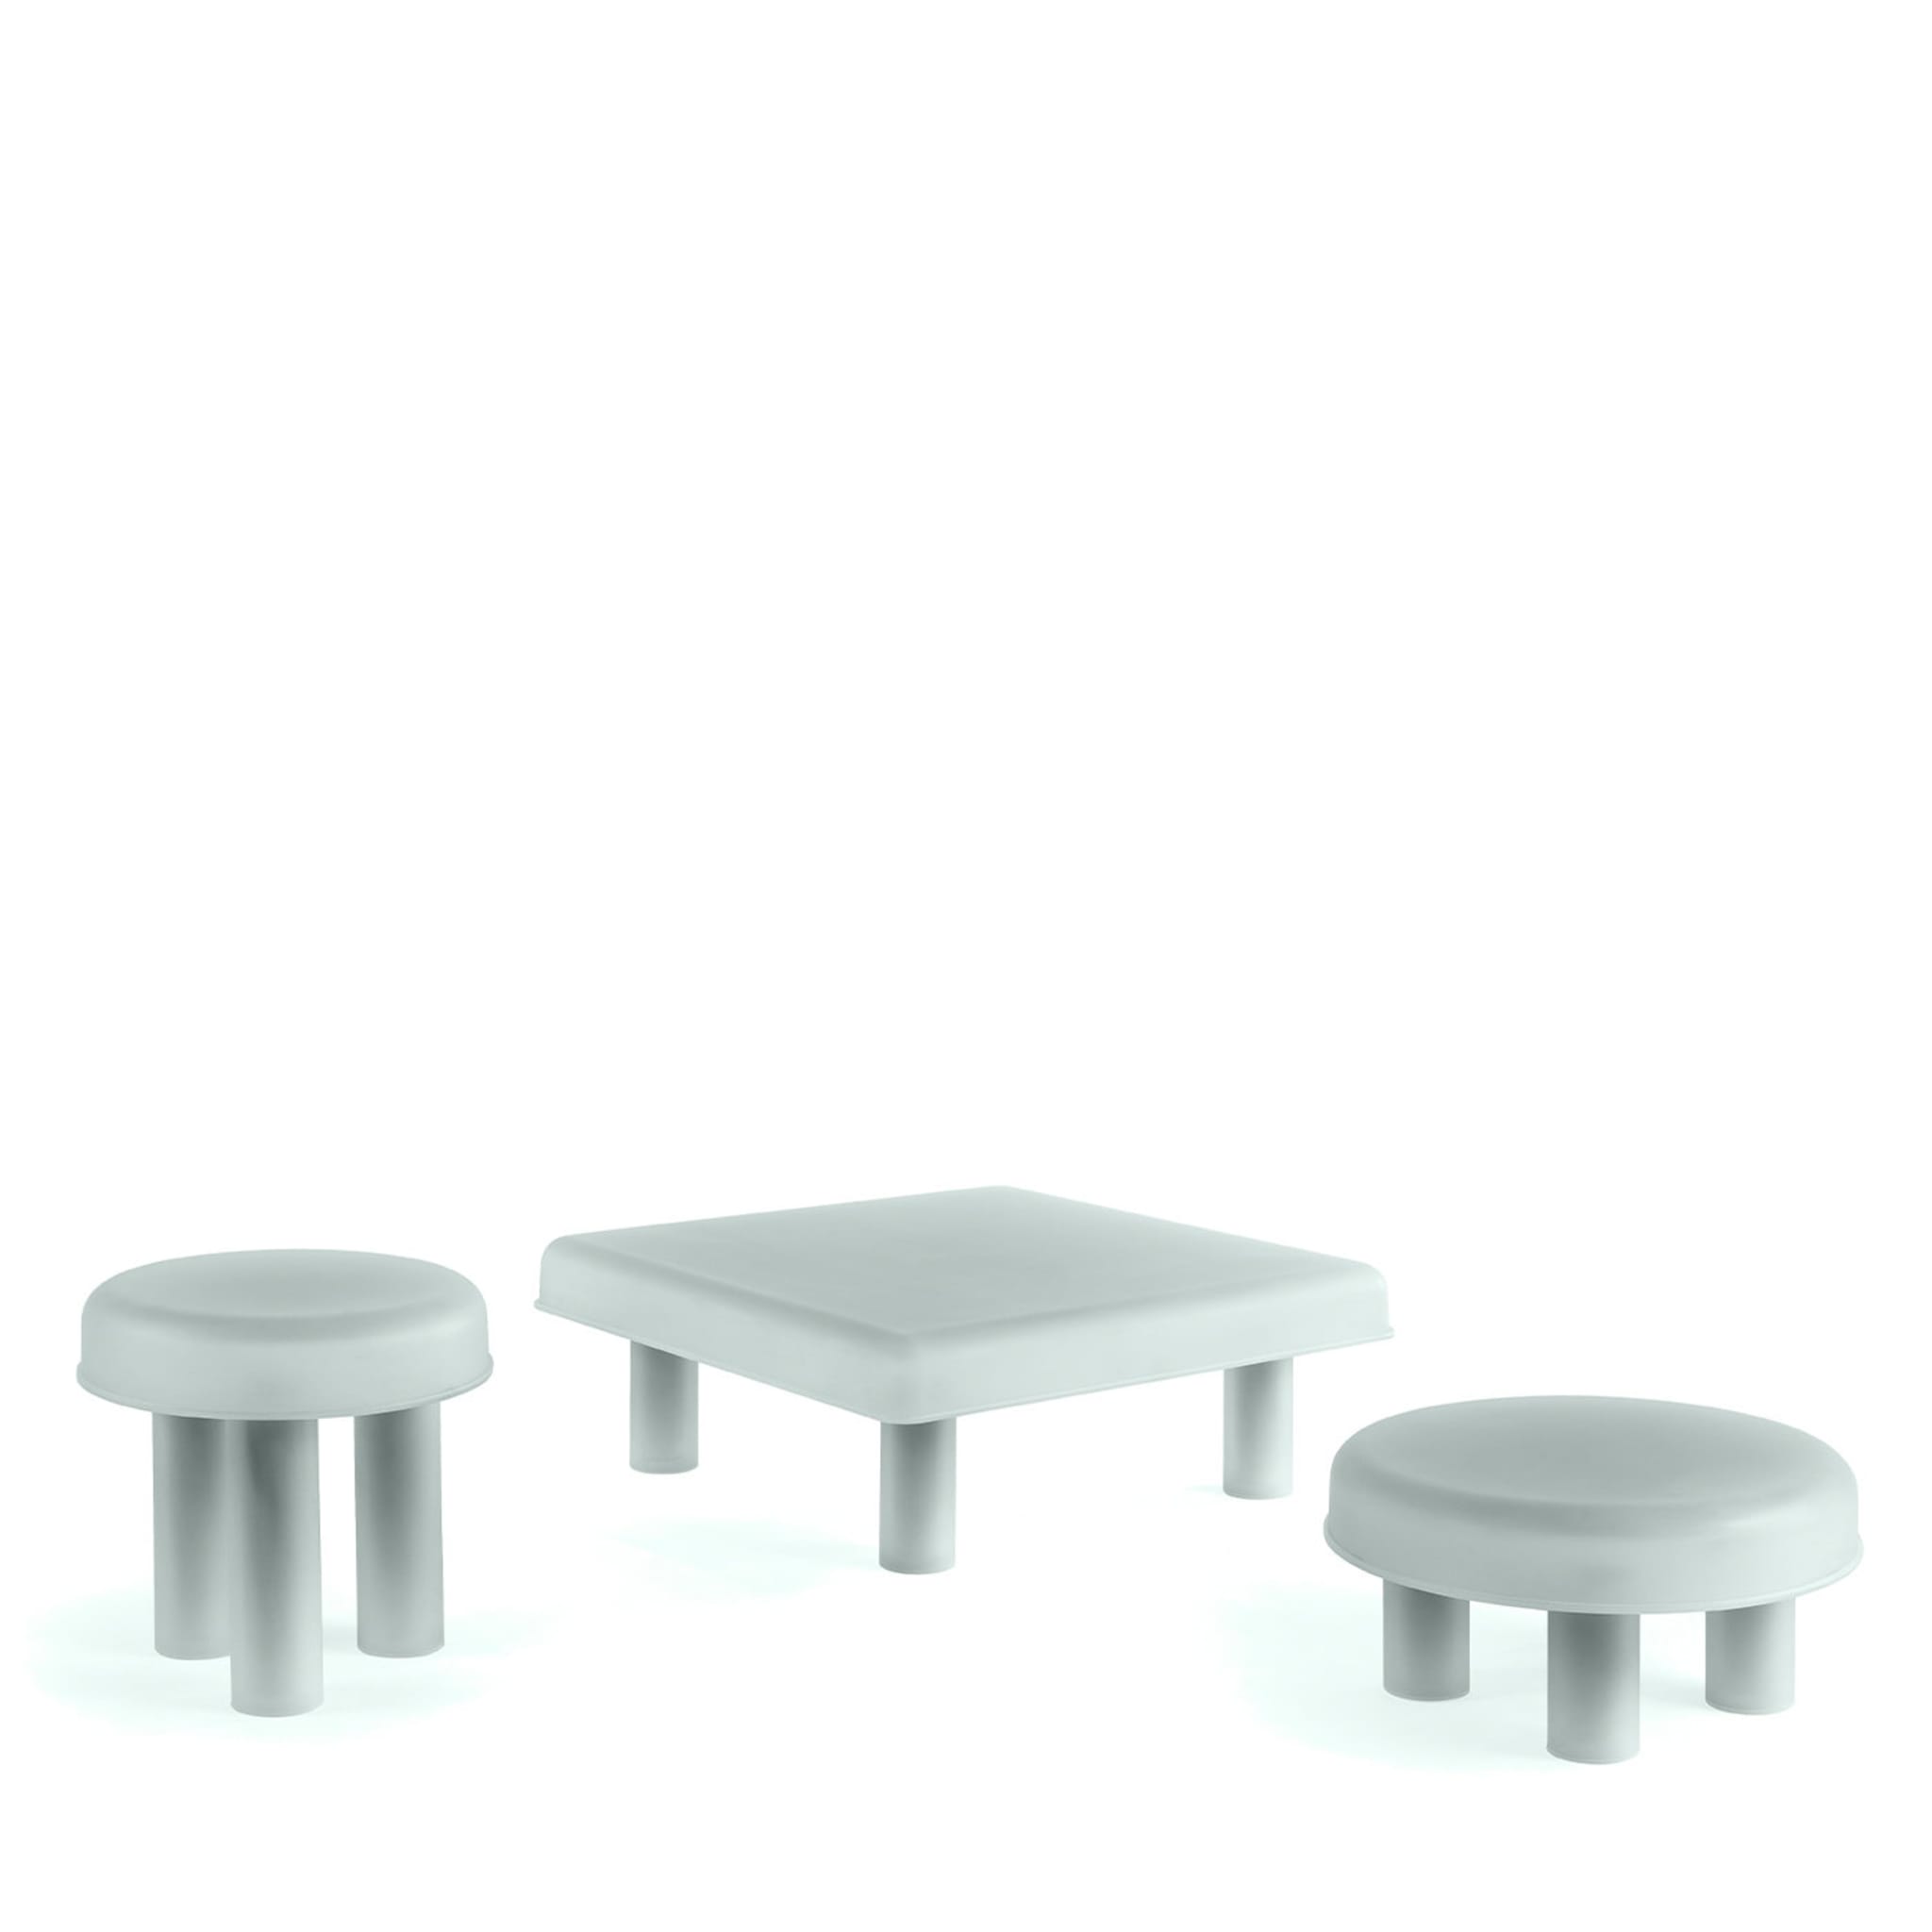 TABLE D'ACCOMPAGNEMENT SOPOVRIA VA - Design by Sovrappensiero - Vue alternative 1